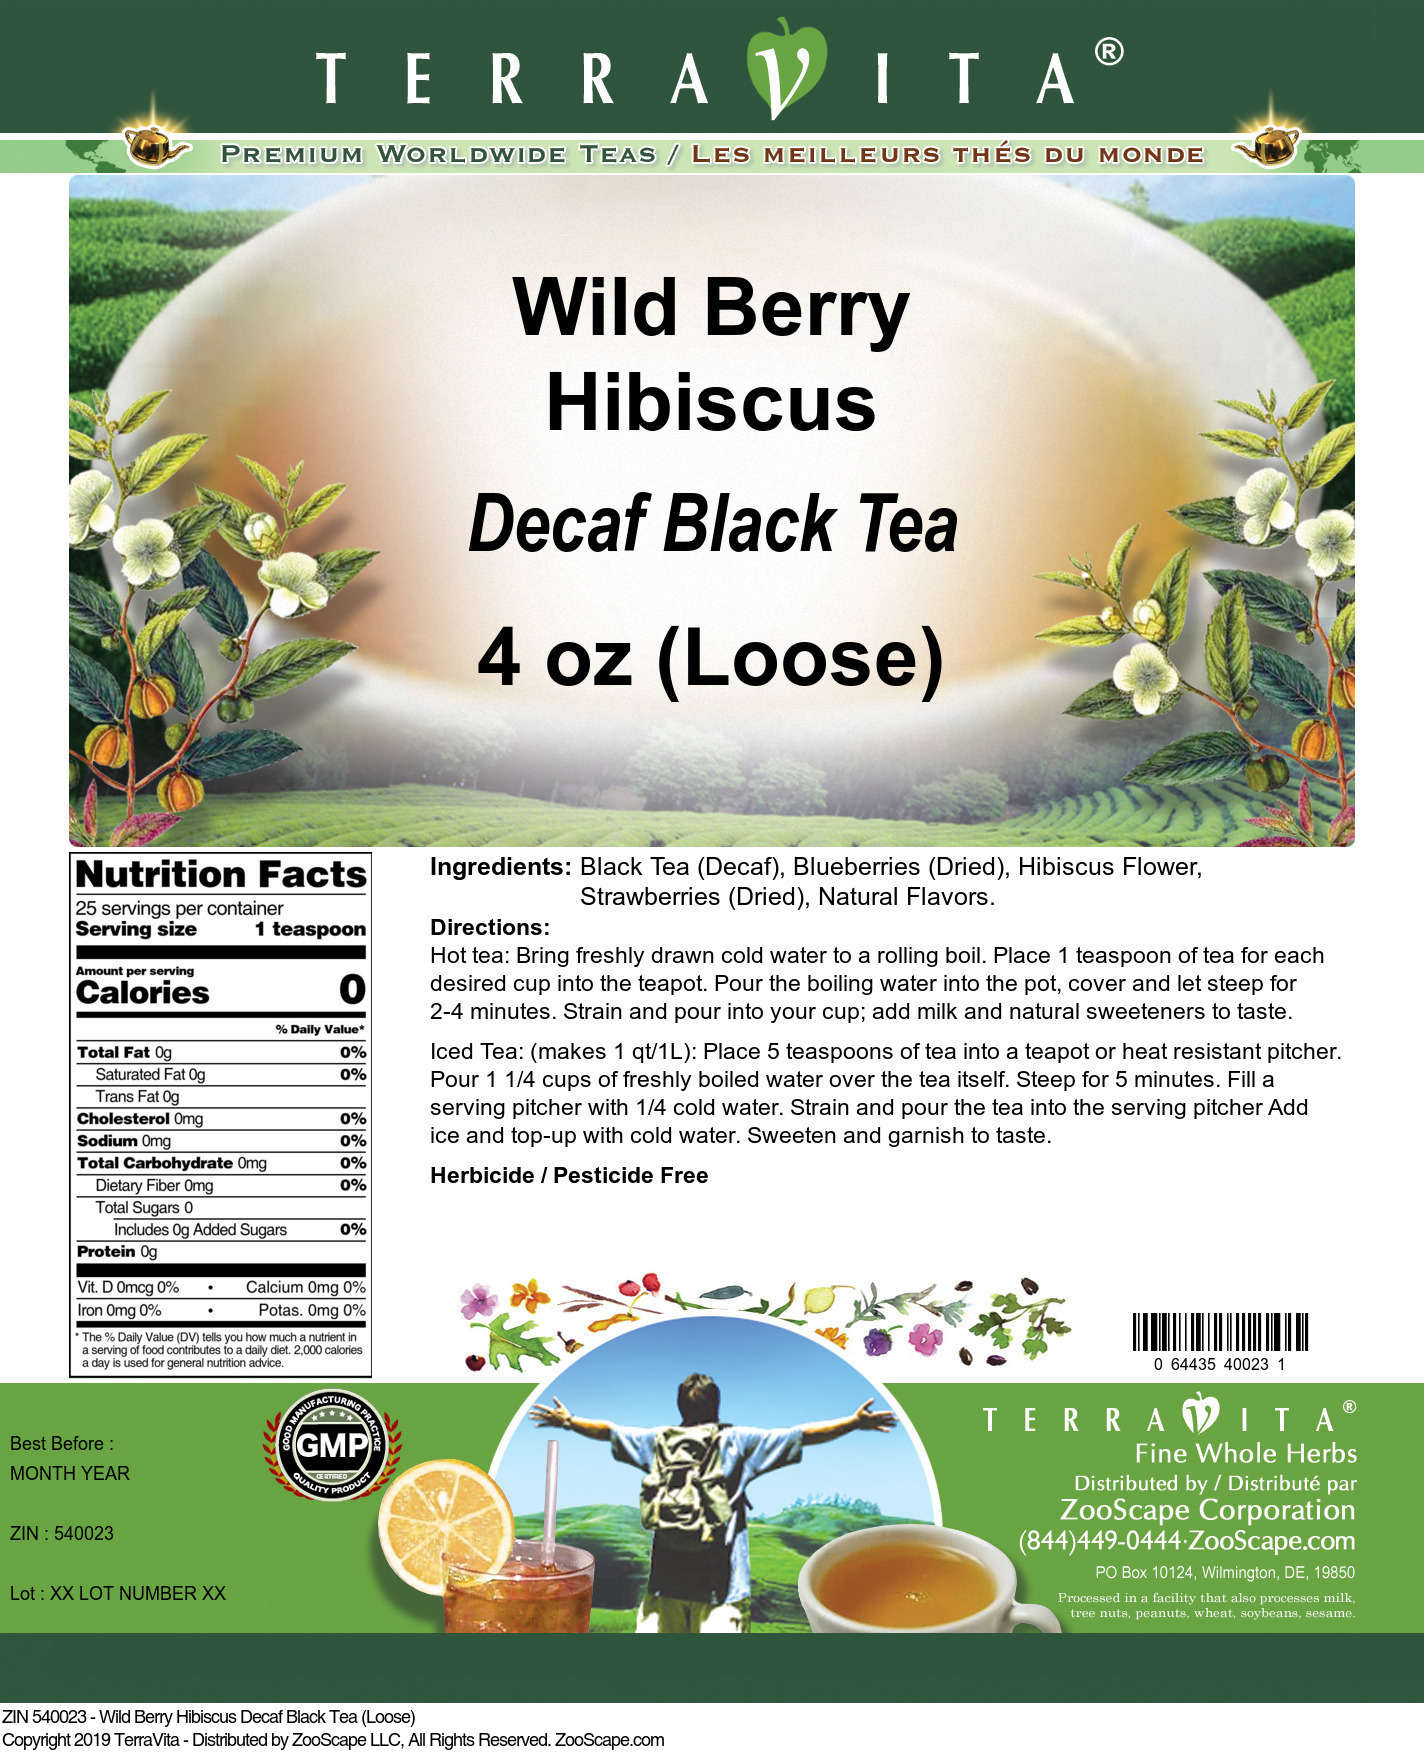 Wild Berry Hibiscus Decaf Black Tea (Loose) - Label